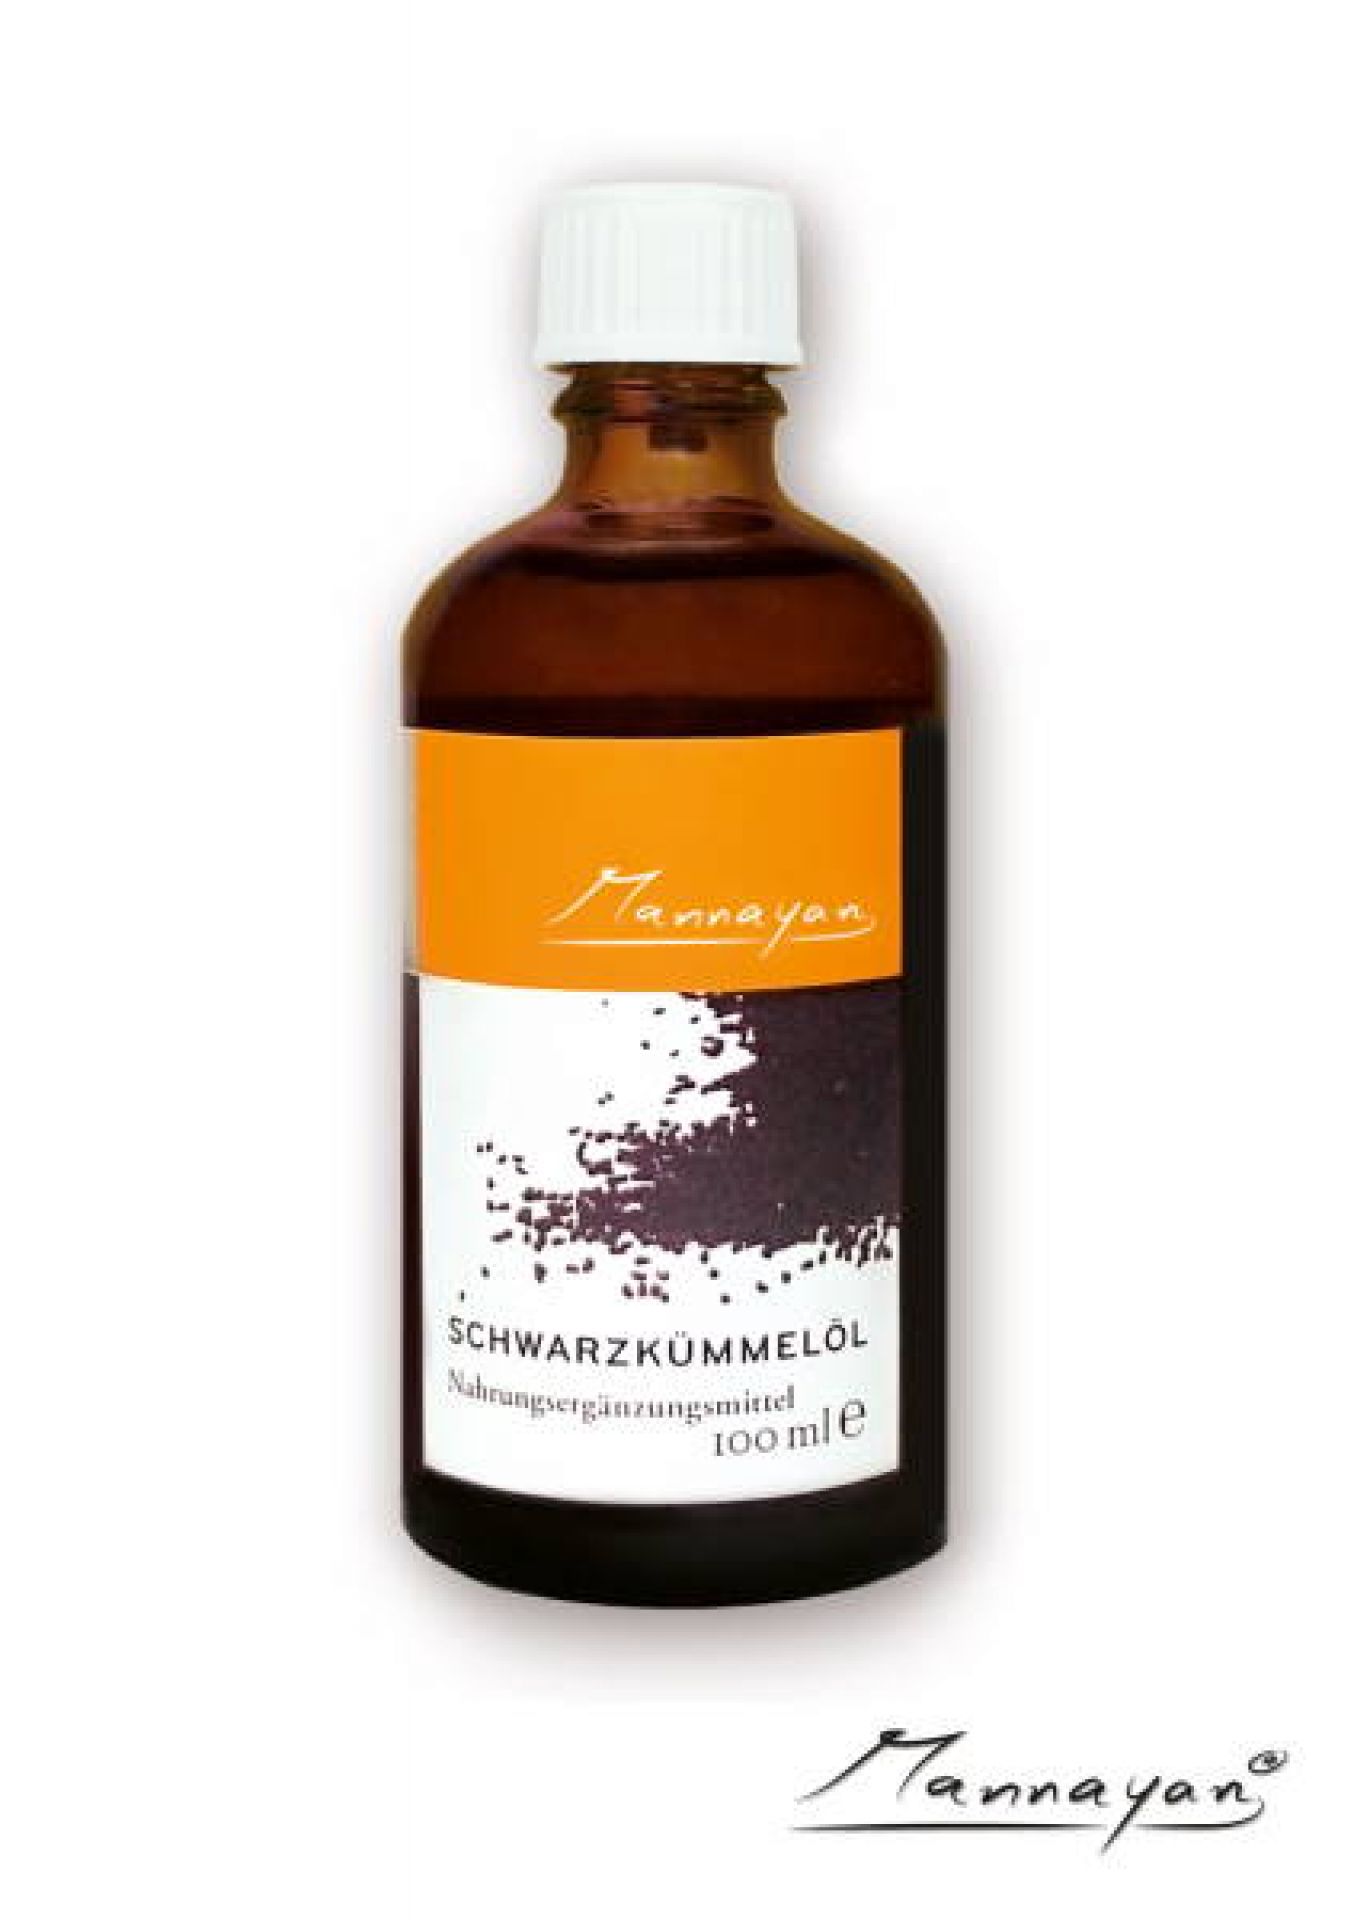 Mannayan Bio-Schwarzkümmelöl (black seed oil) 100 ml